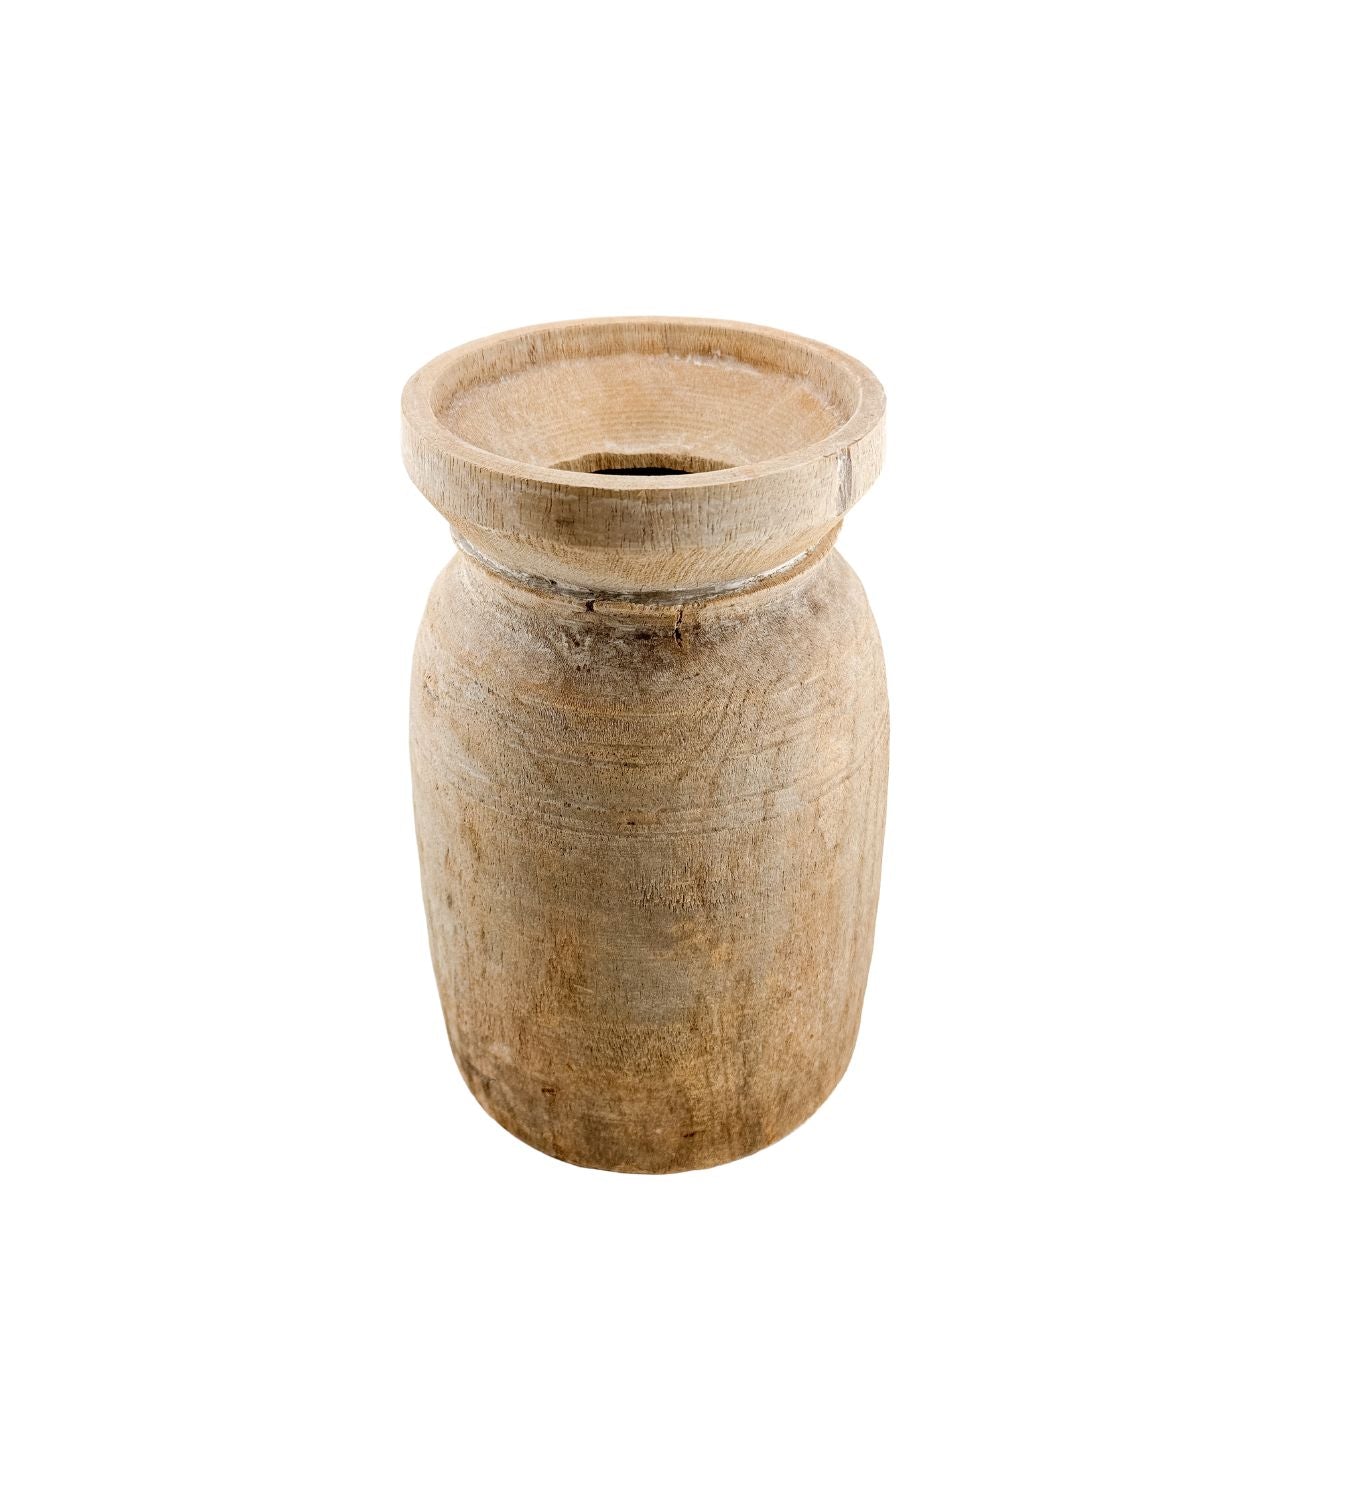 Reclaimed Small Vase, No. 6